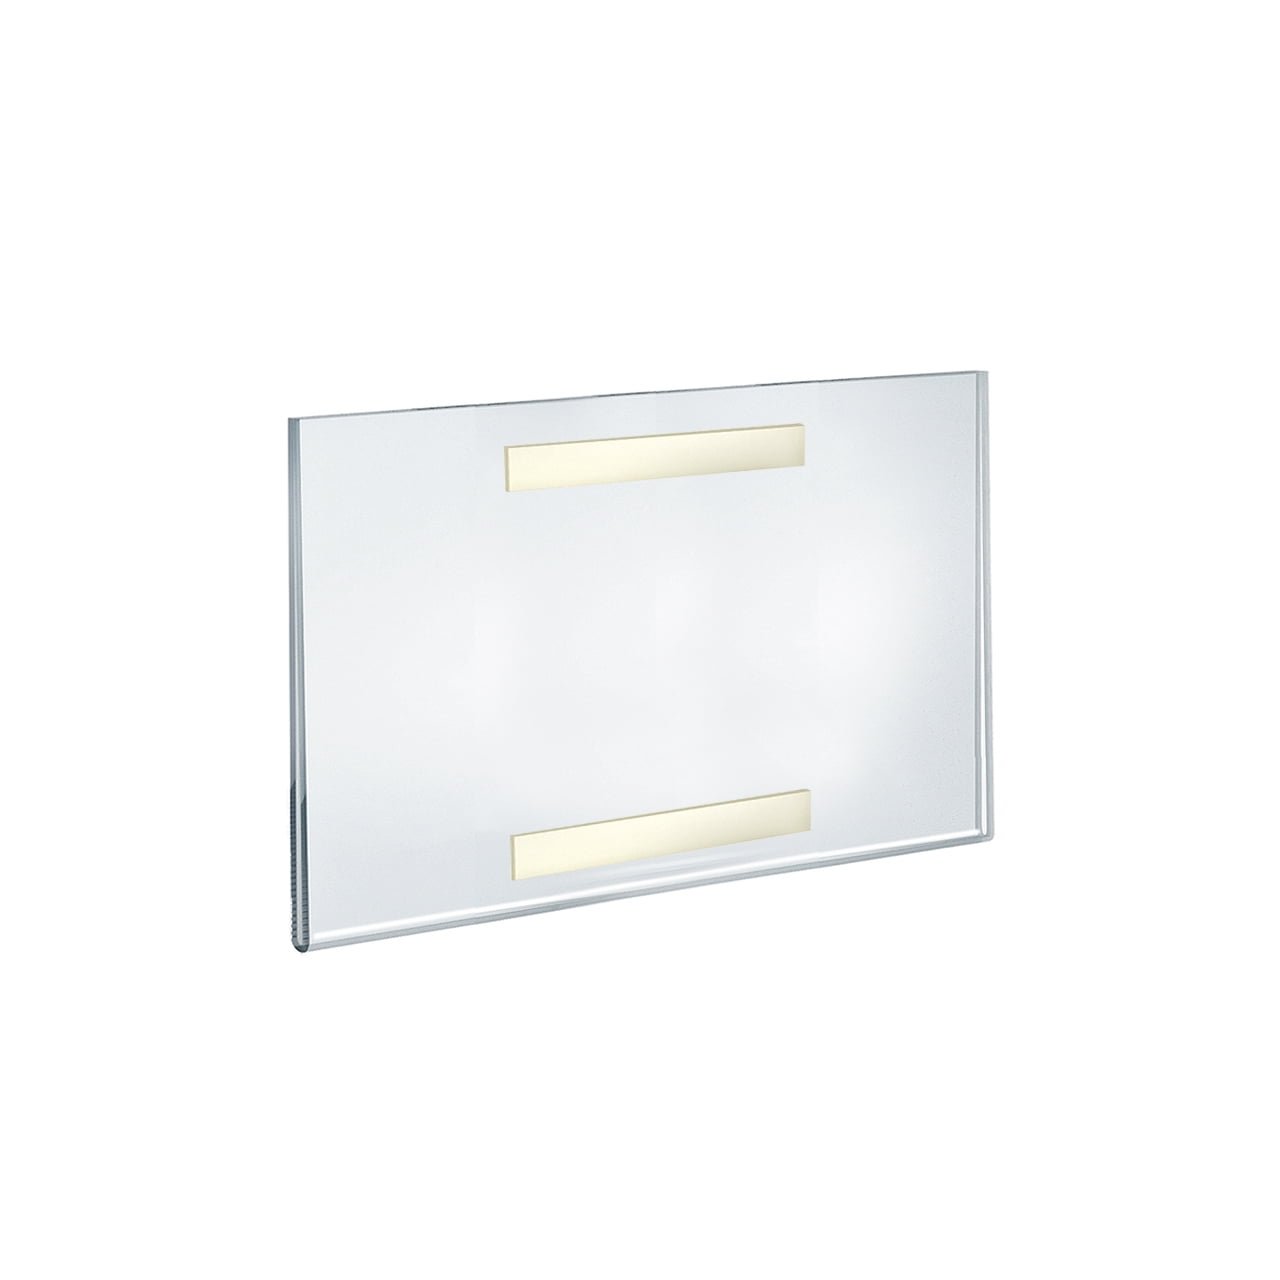 Azar Displays 122040 Self Adhesive Clear Acrylic Wall Sign Holder Frame 16